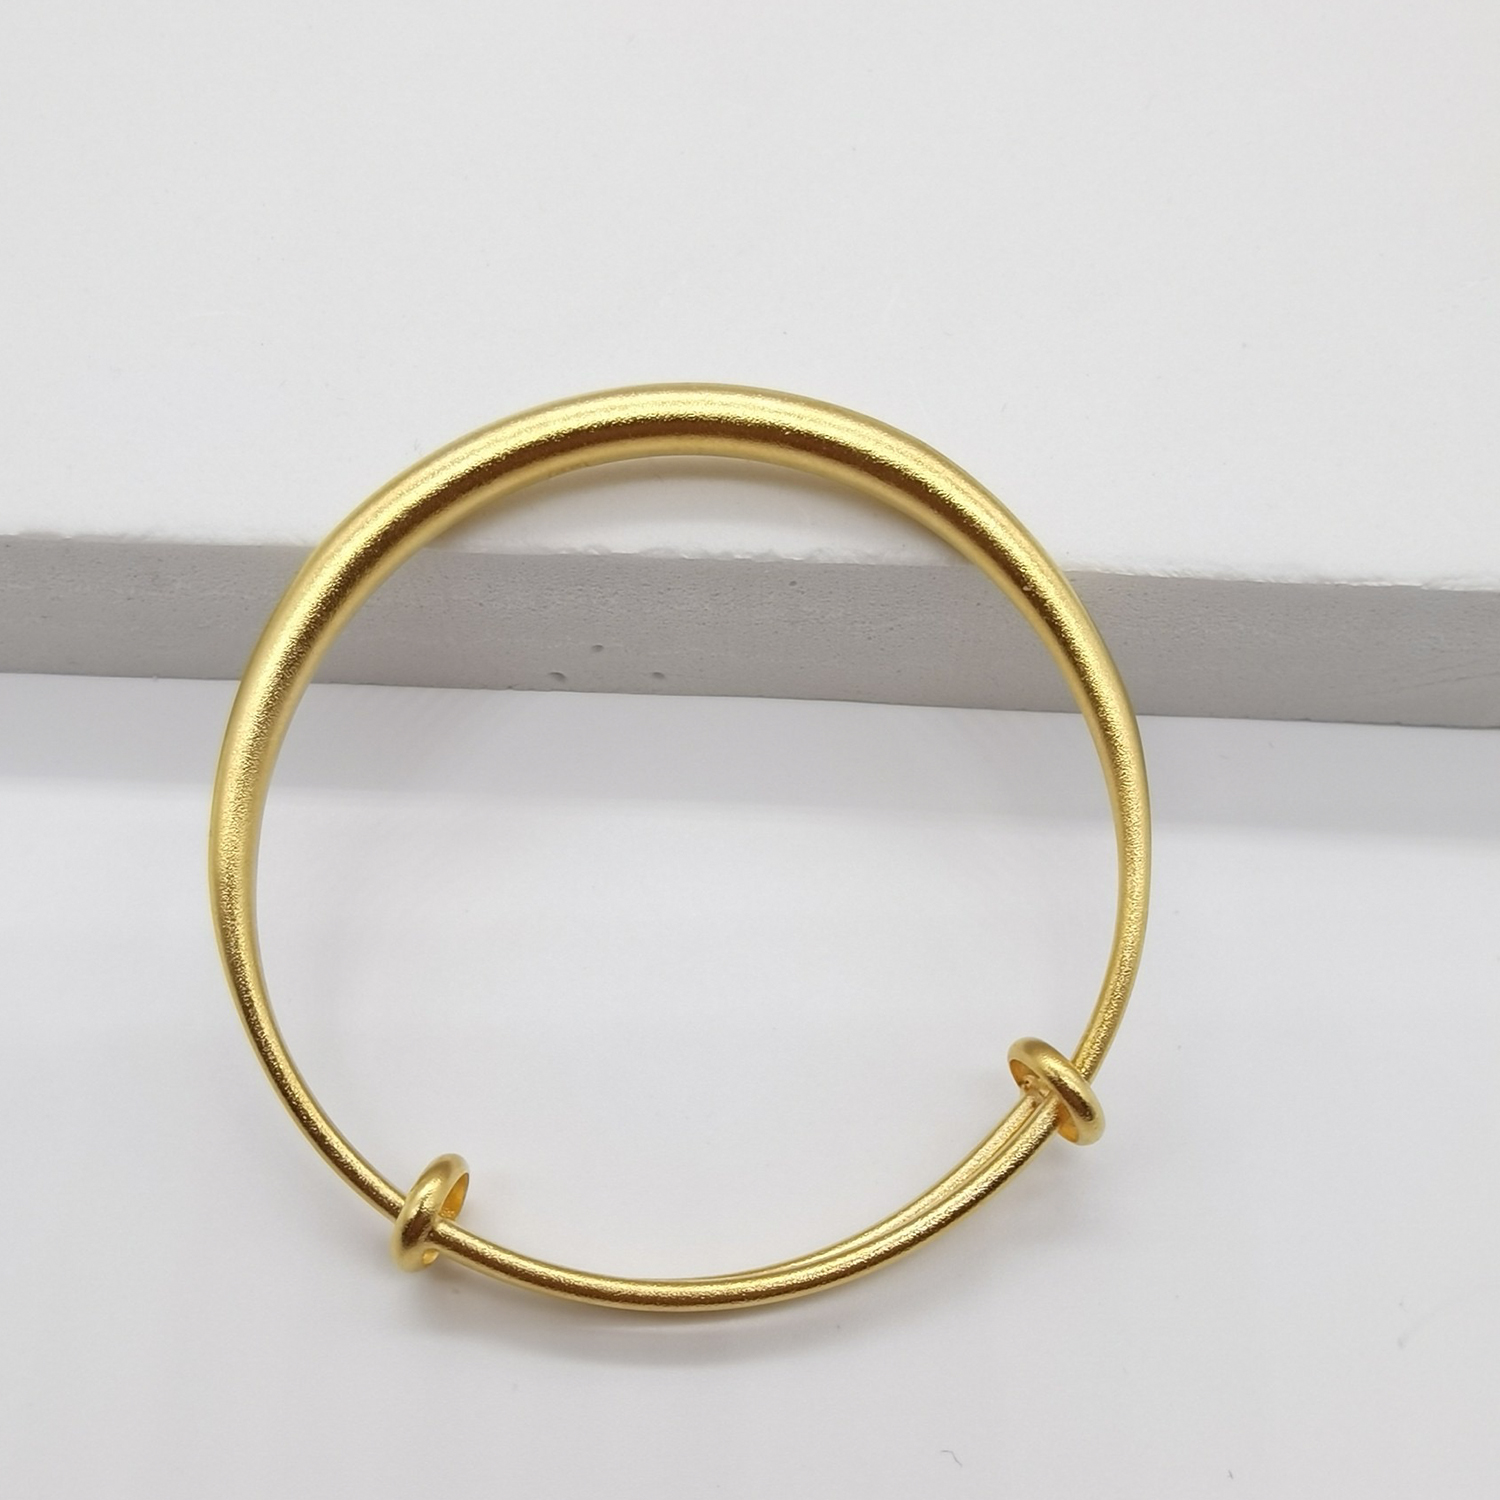 Alluvial gold ancient method vacuum electroplating 24K gold plain ring push-pull bracelet